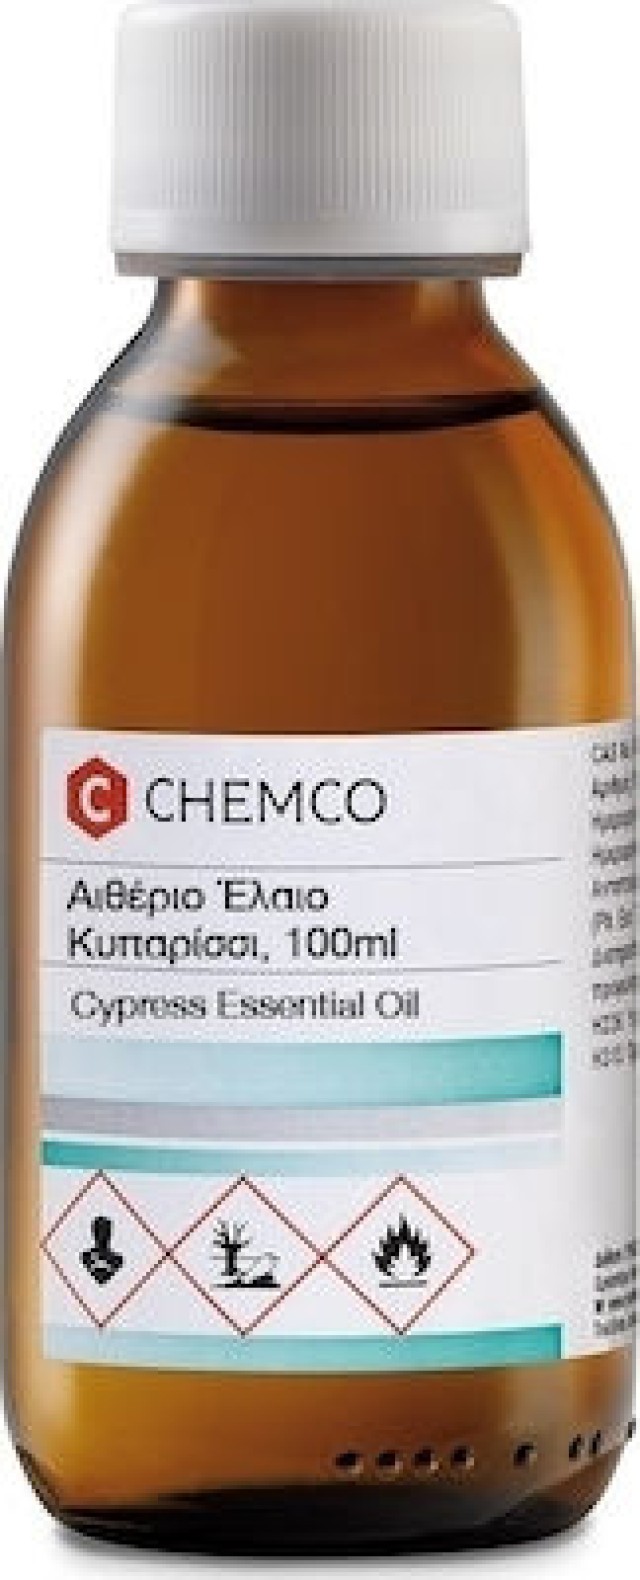 Chemco Αιθέριο Έλαιο Κυπαρίσσι 100ml